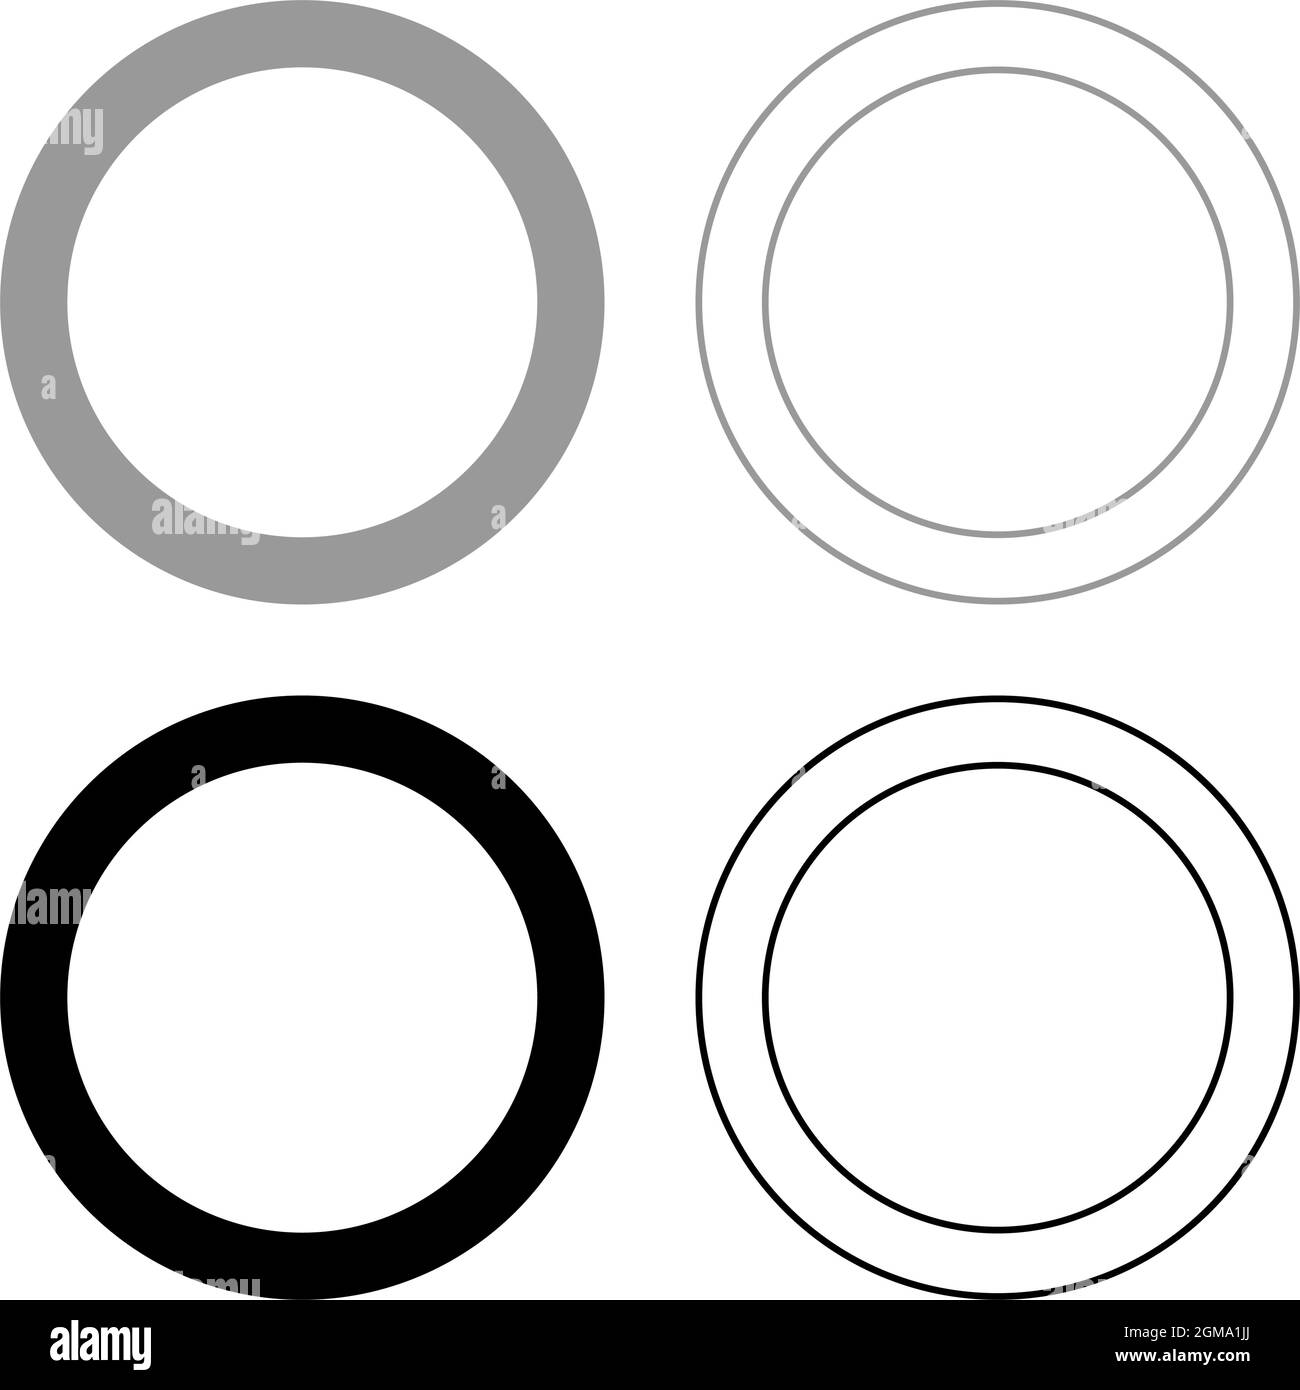 Gummidichtung Tülle Dichtung Leckage O-Ring Retten Symbol im Kreis rund  schwarz Farbe Vektor-Illustration solide Kontur Stil einfaches Bild Stock- Vektorgrafik - Alamy